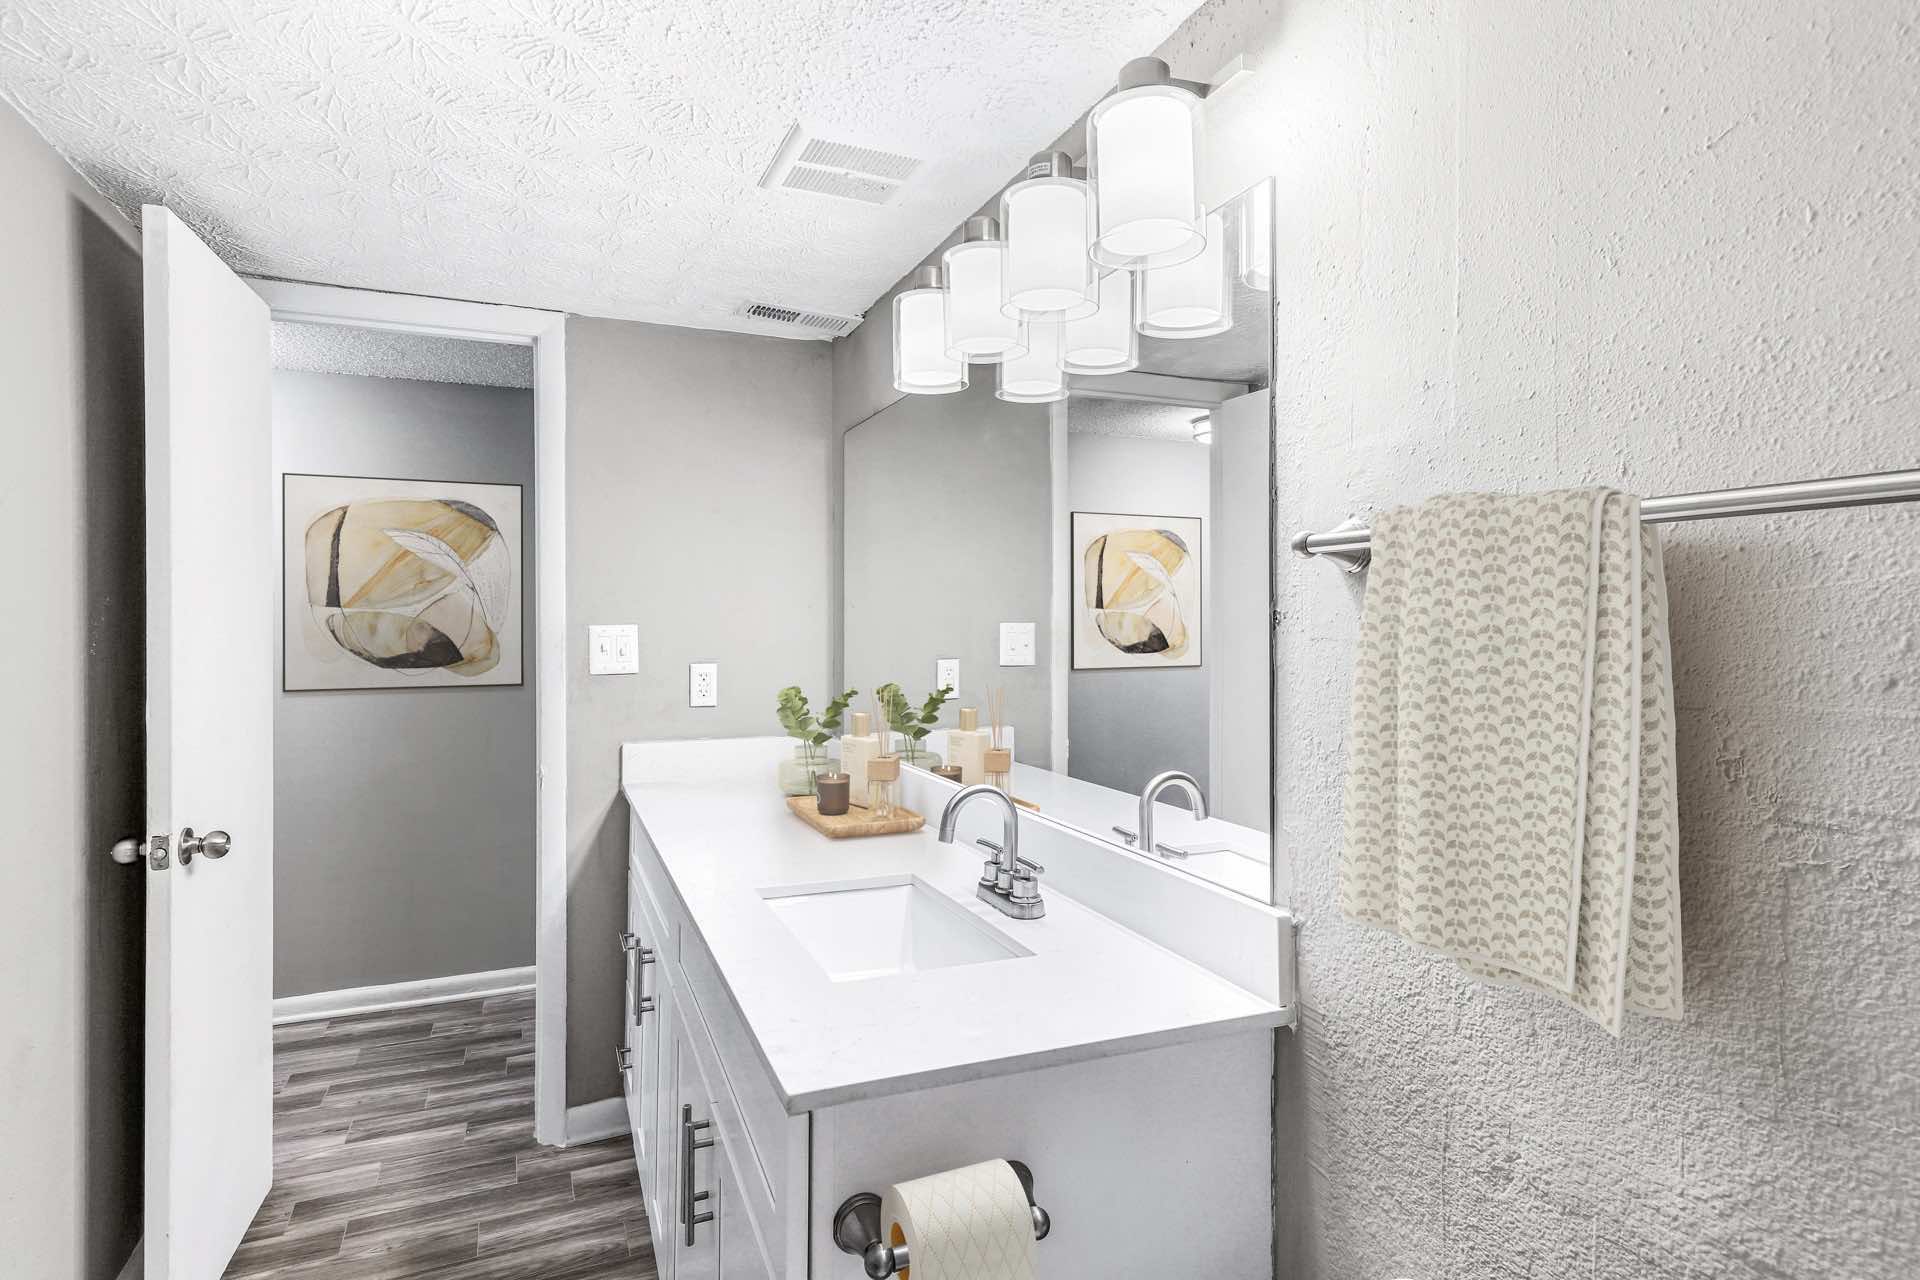 bathroom with wood-style flooring and modern lighting